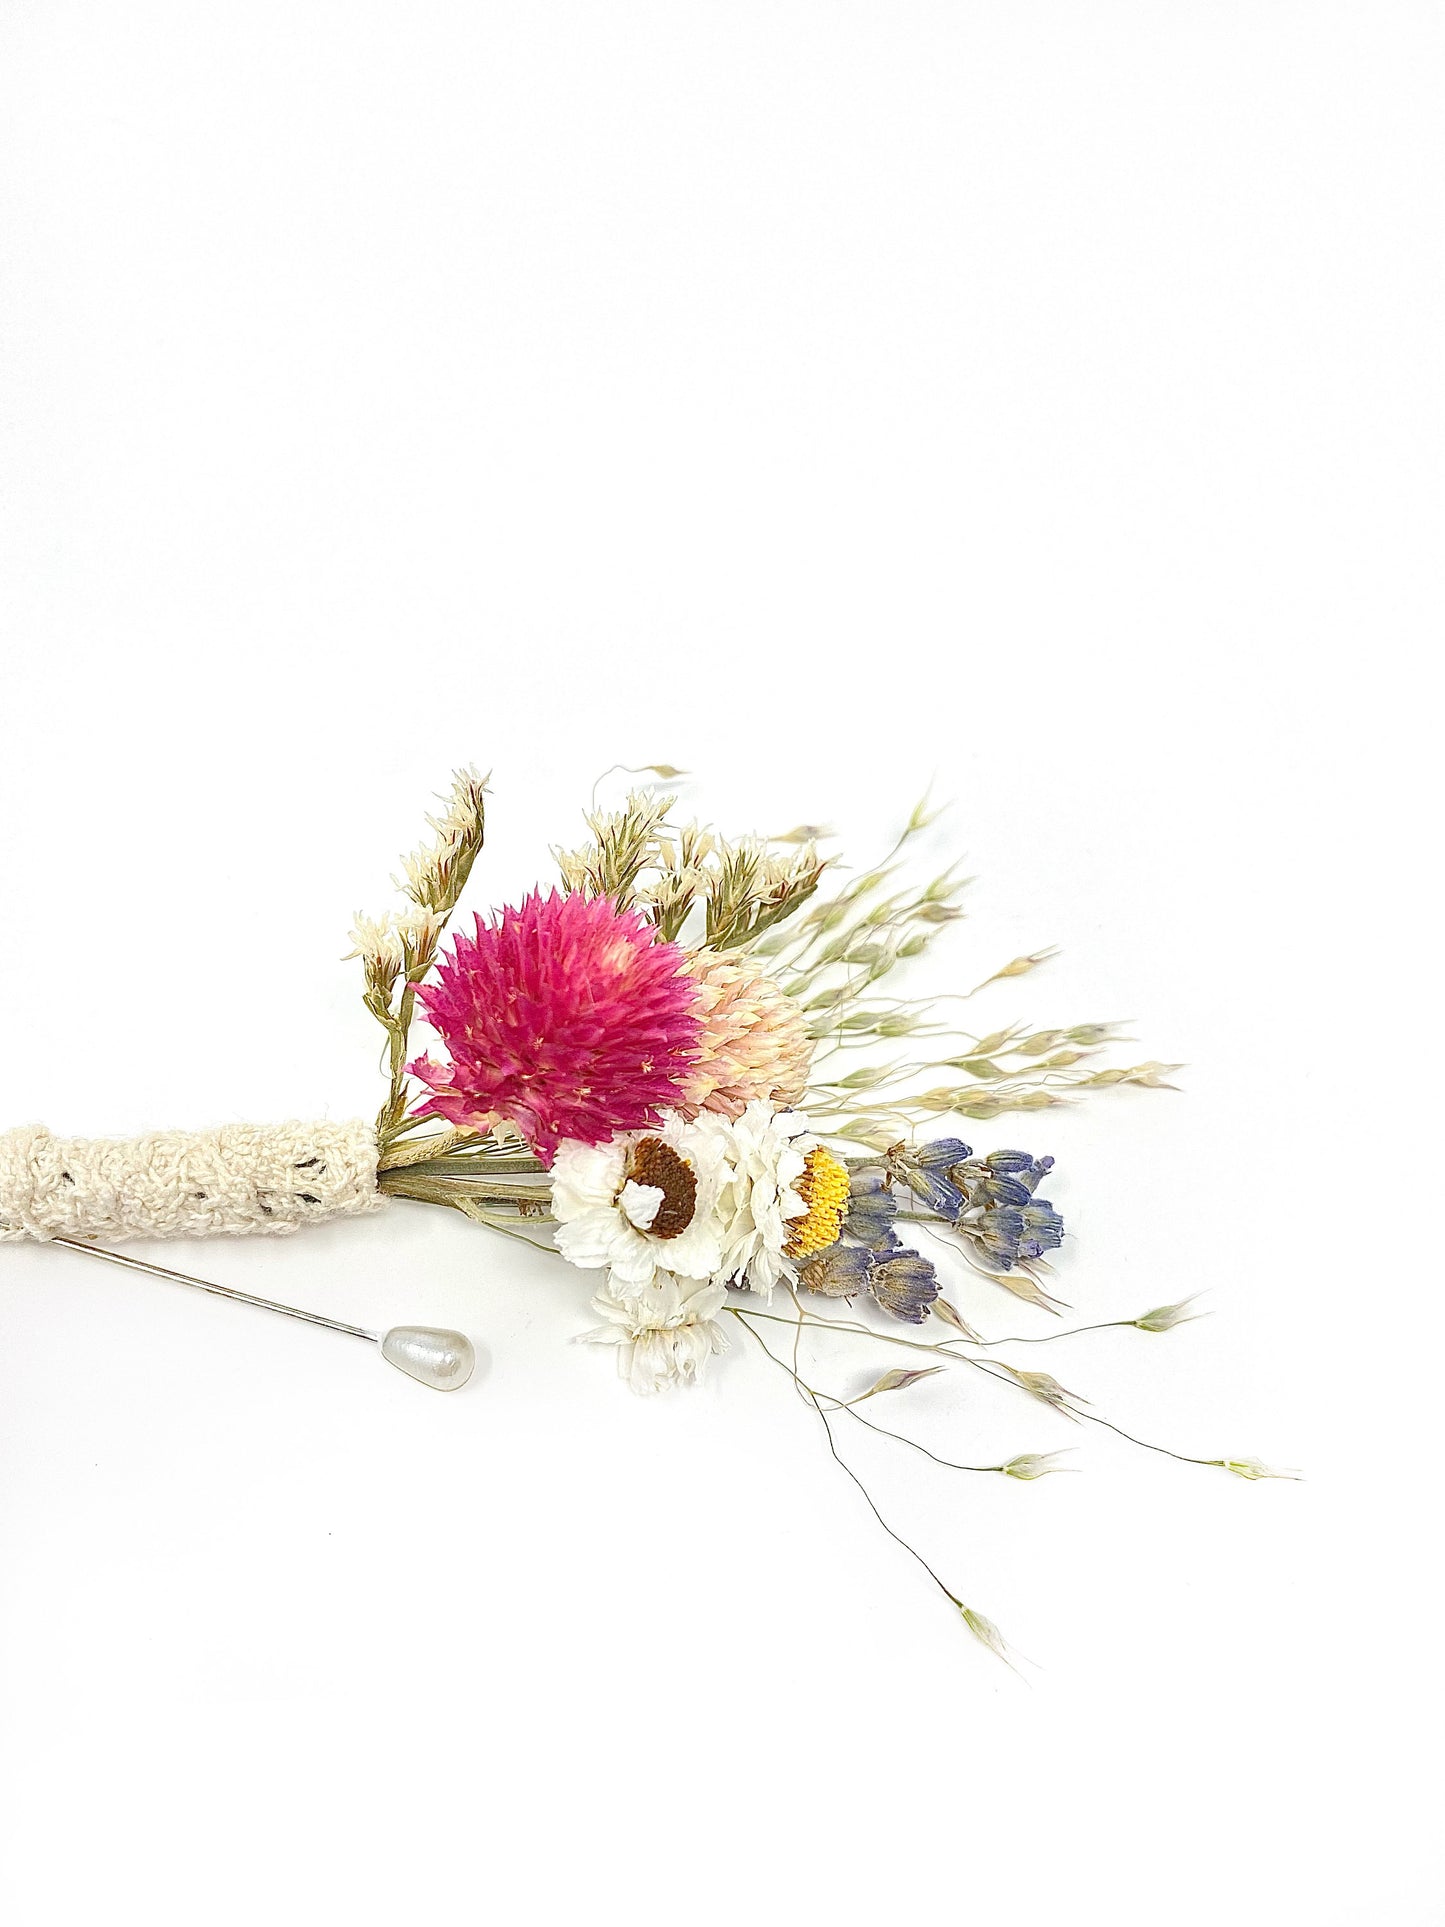 Wedding Boutonniere, Preserved Floral, Dried Flowers, Bridal Accessories, Decor, Lavender, Ammobium, German Statice